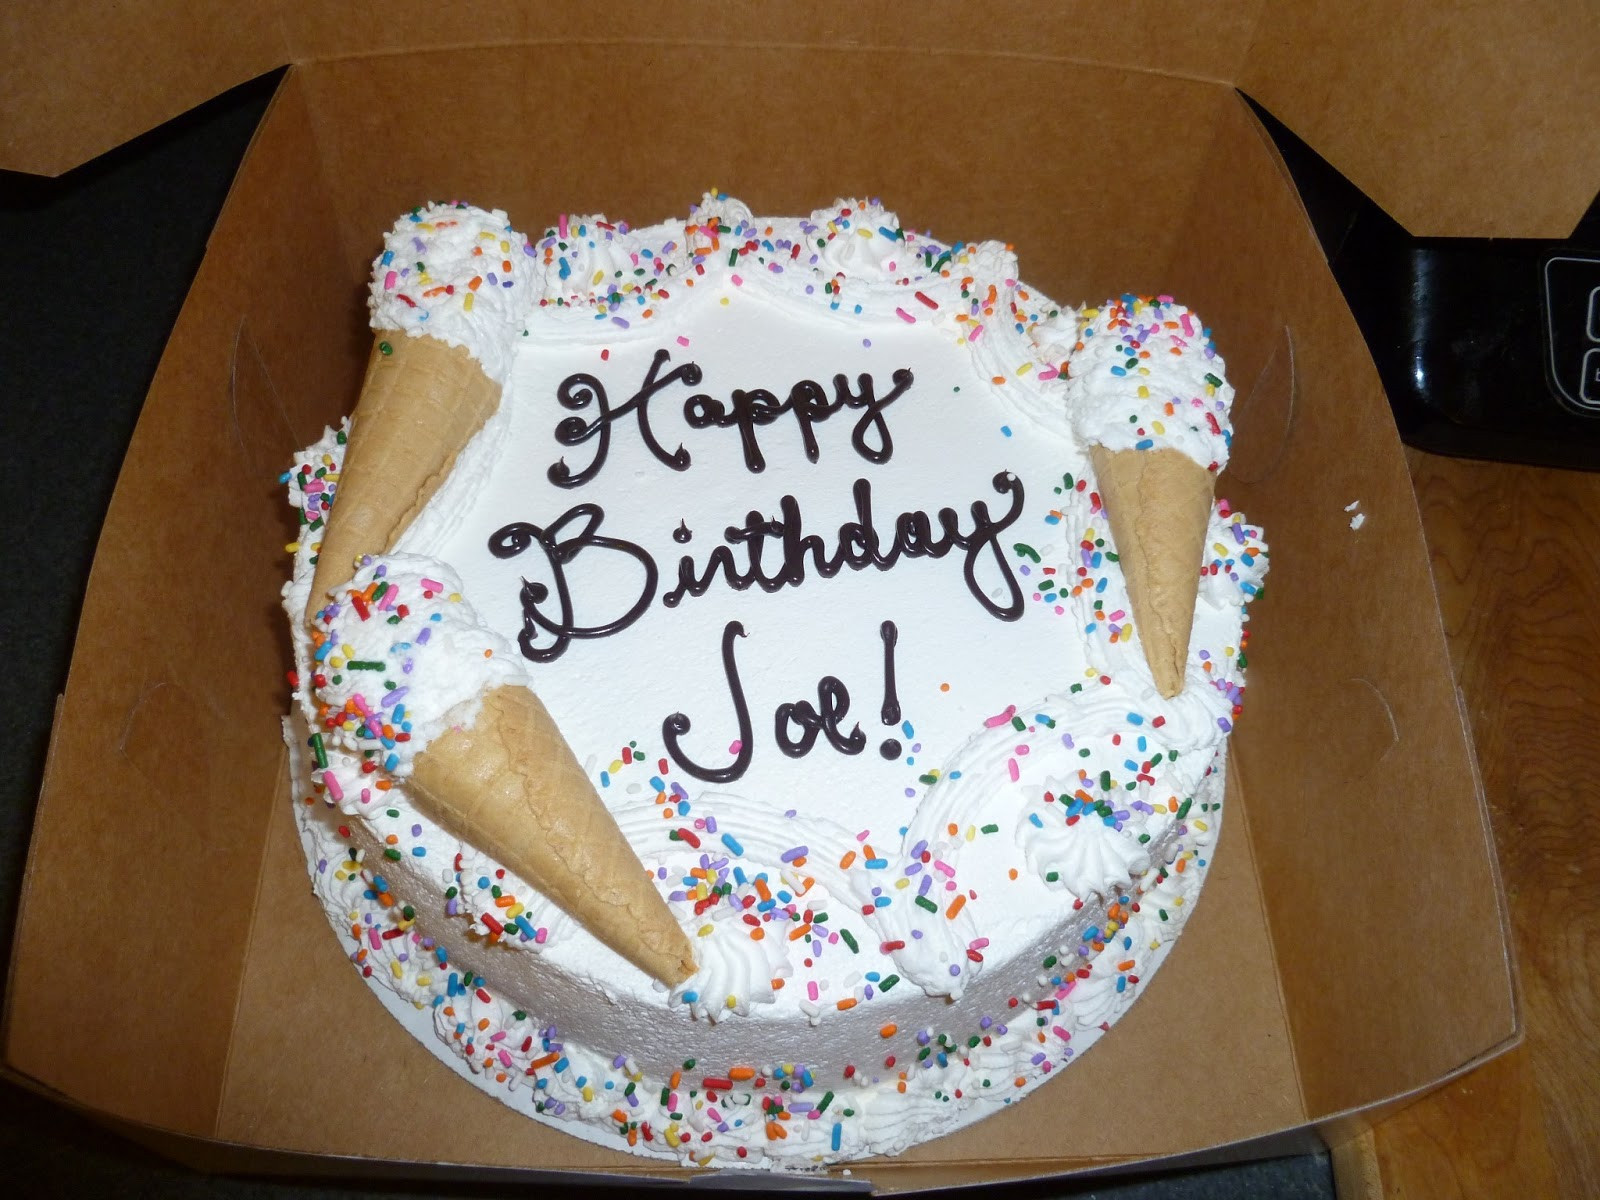 Best ideas about Happy Birthday Joe Cake
. Save or Pin Happy birthday Joe Now.